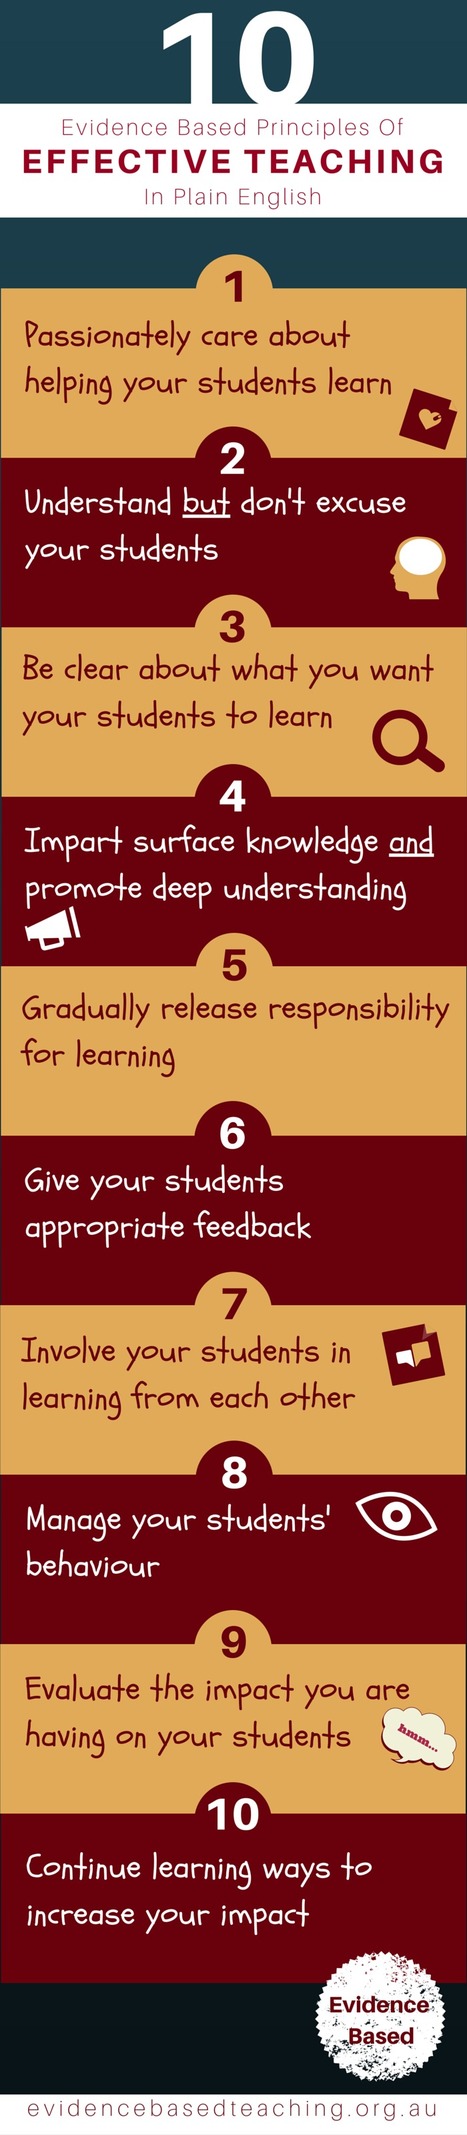 Principles of Effective Teaching | Infographic | Professional EDUcators | eLEADERship | eSkills | 21st Century Learning and Teaching | Scoop.it